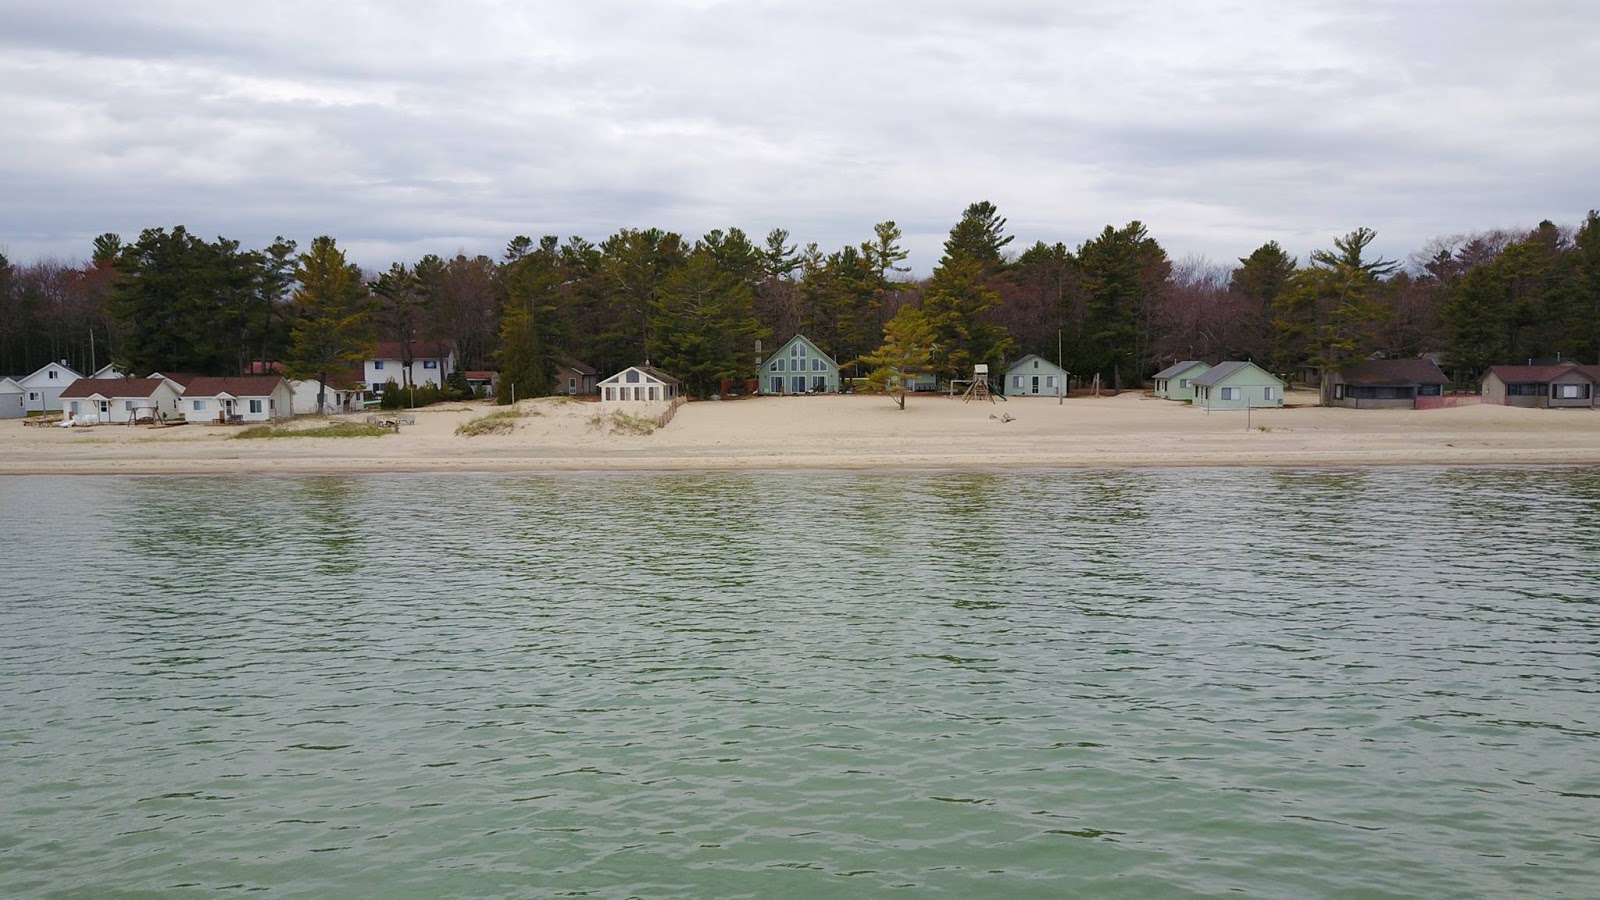 Fotografija Cedar lake resort area z turkizna čista voda površino